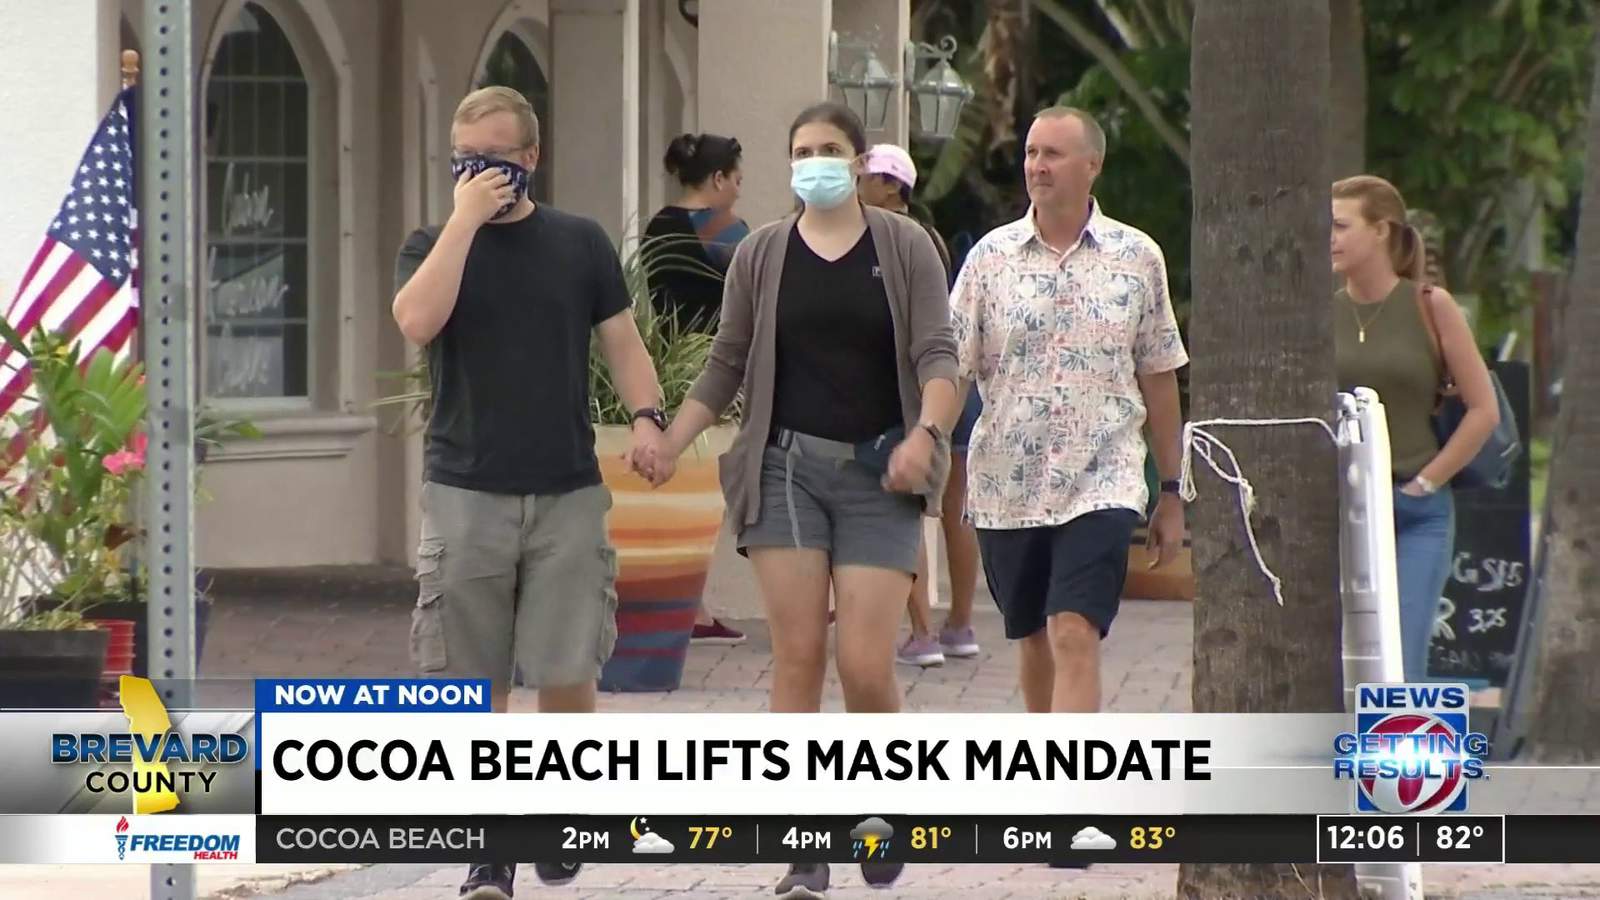 Cocoa Beach lifts mask mandate